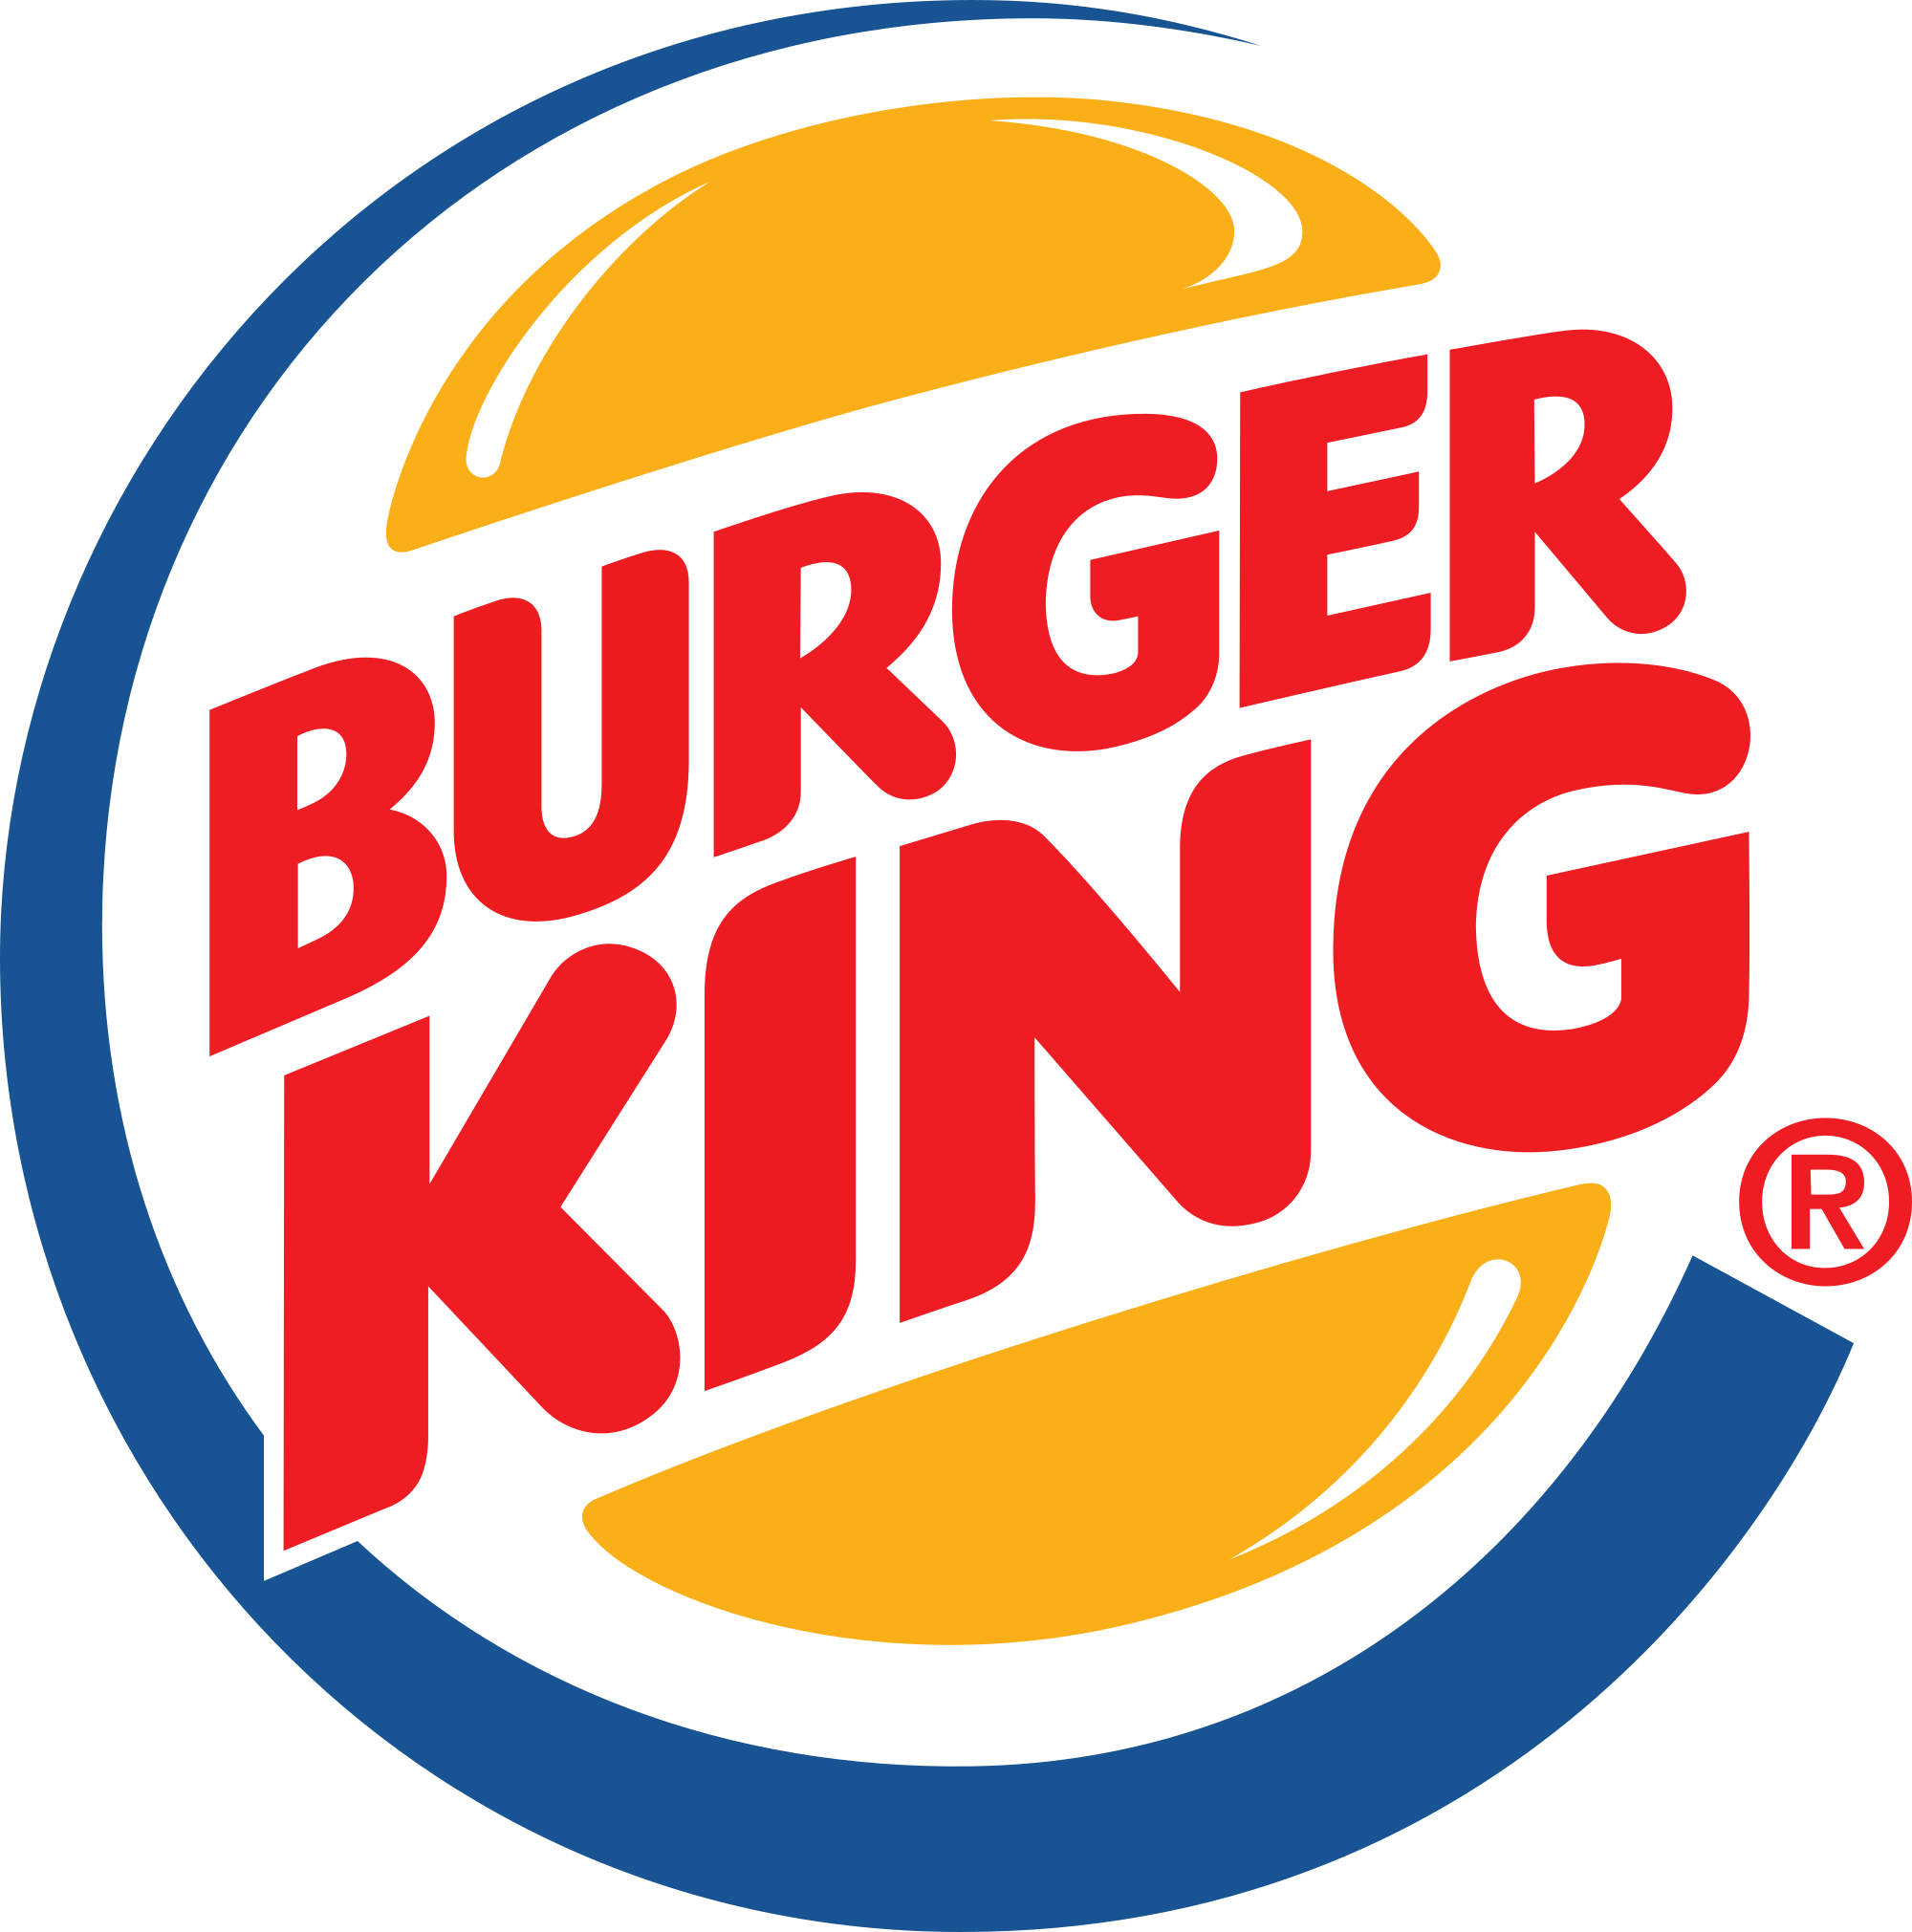 Burger King logo black and wh